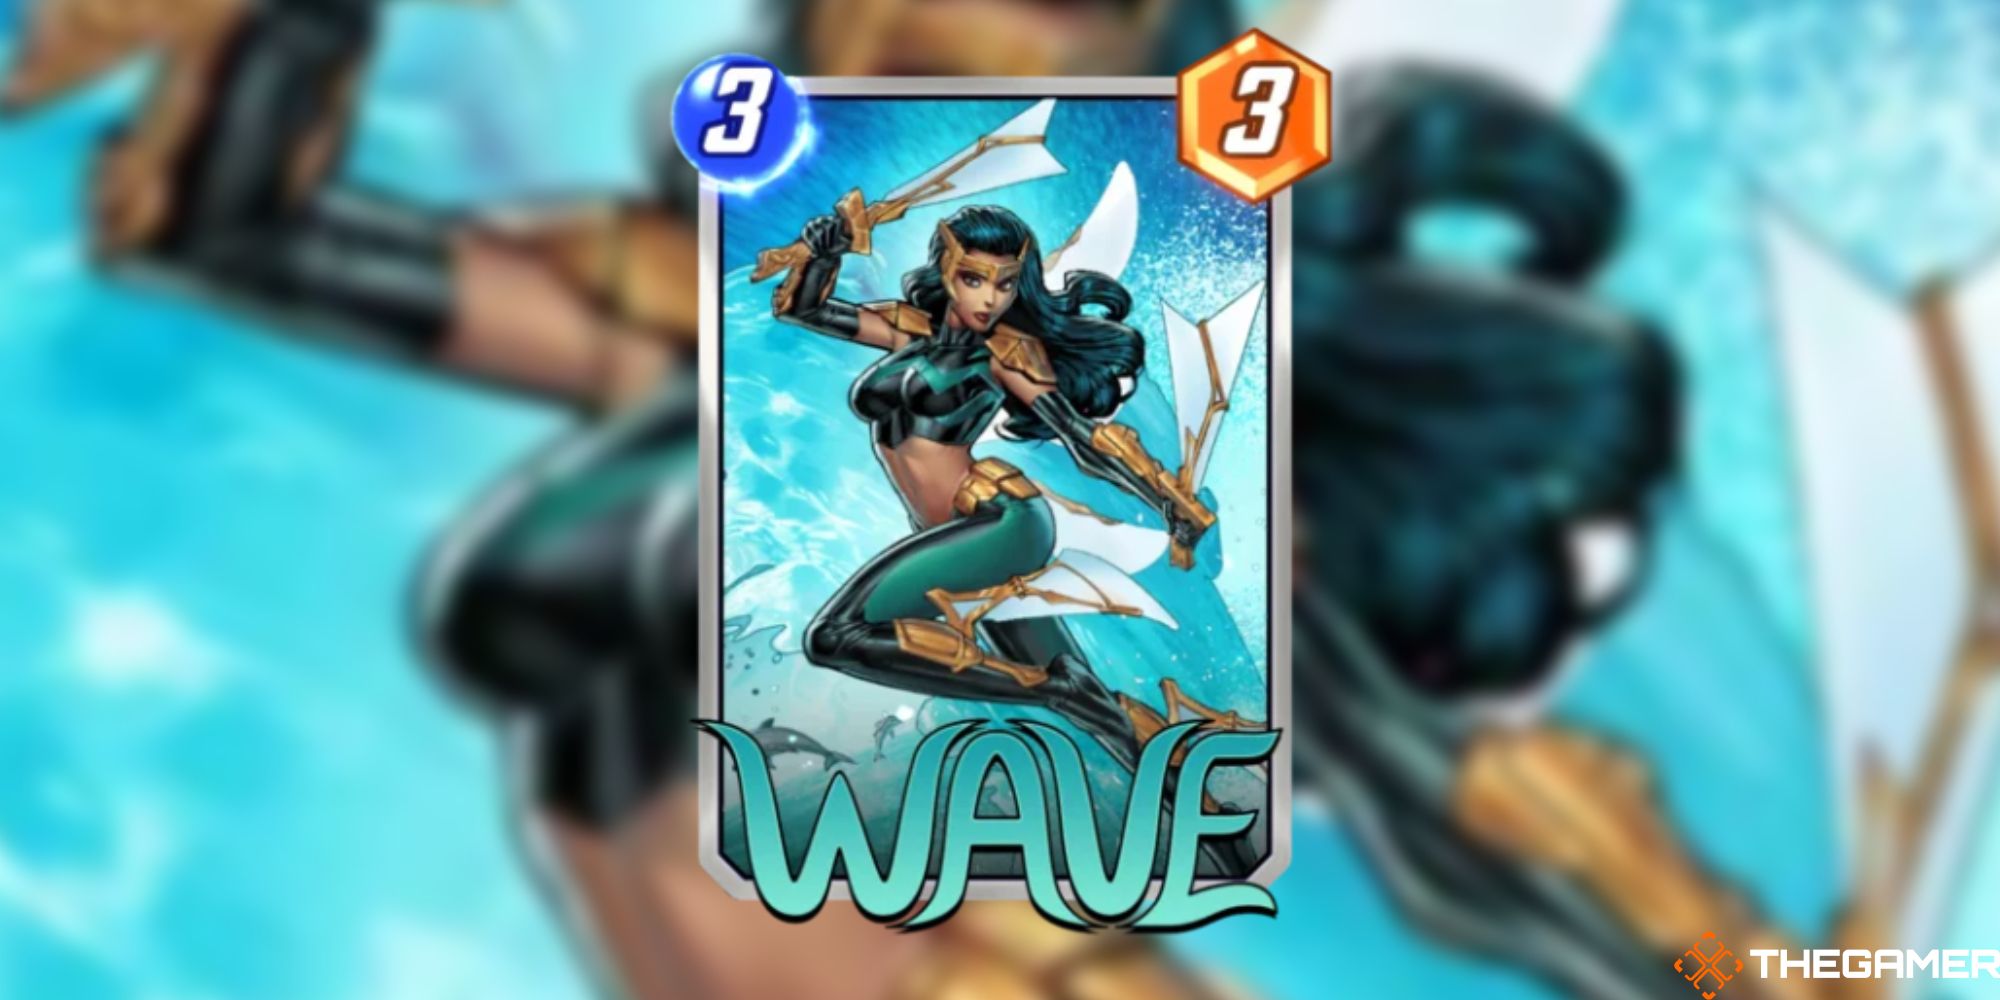 Marvel Snap - Wave on a blurred background